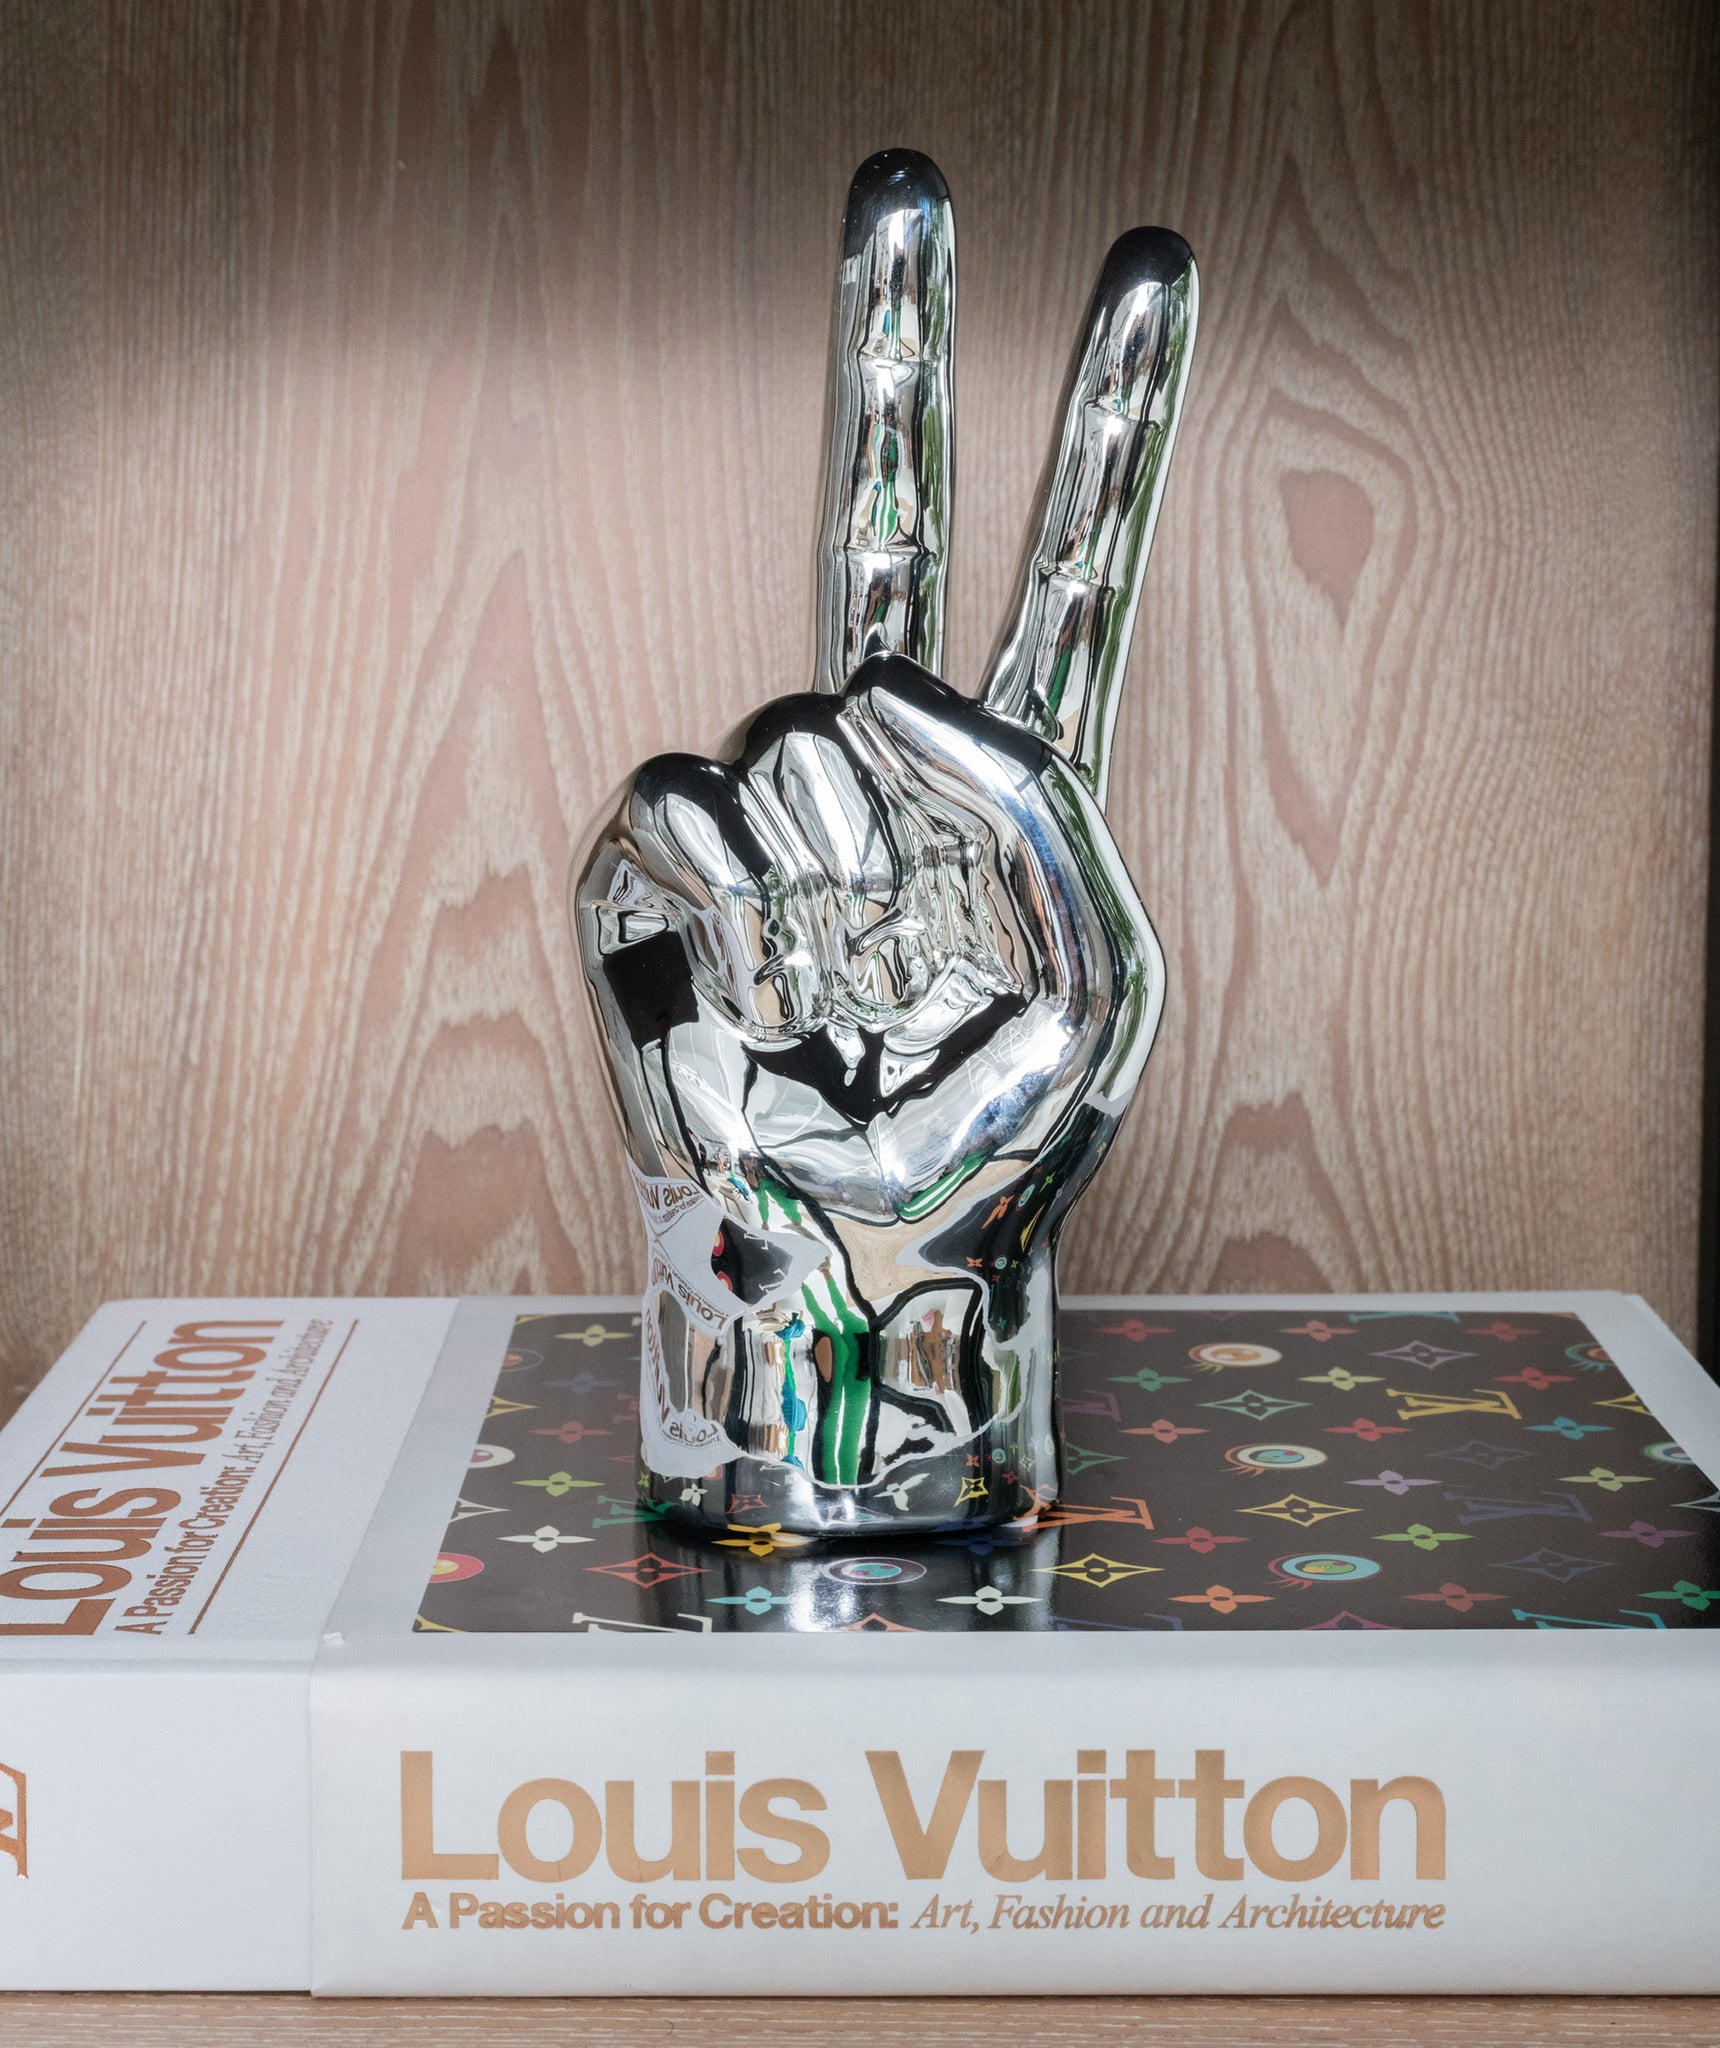 Louis Vuitton Rizzoli Louis Vuitton: Art, Fashion and Architecture